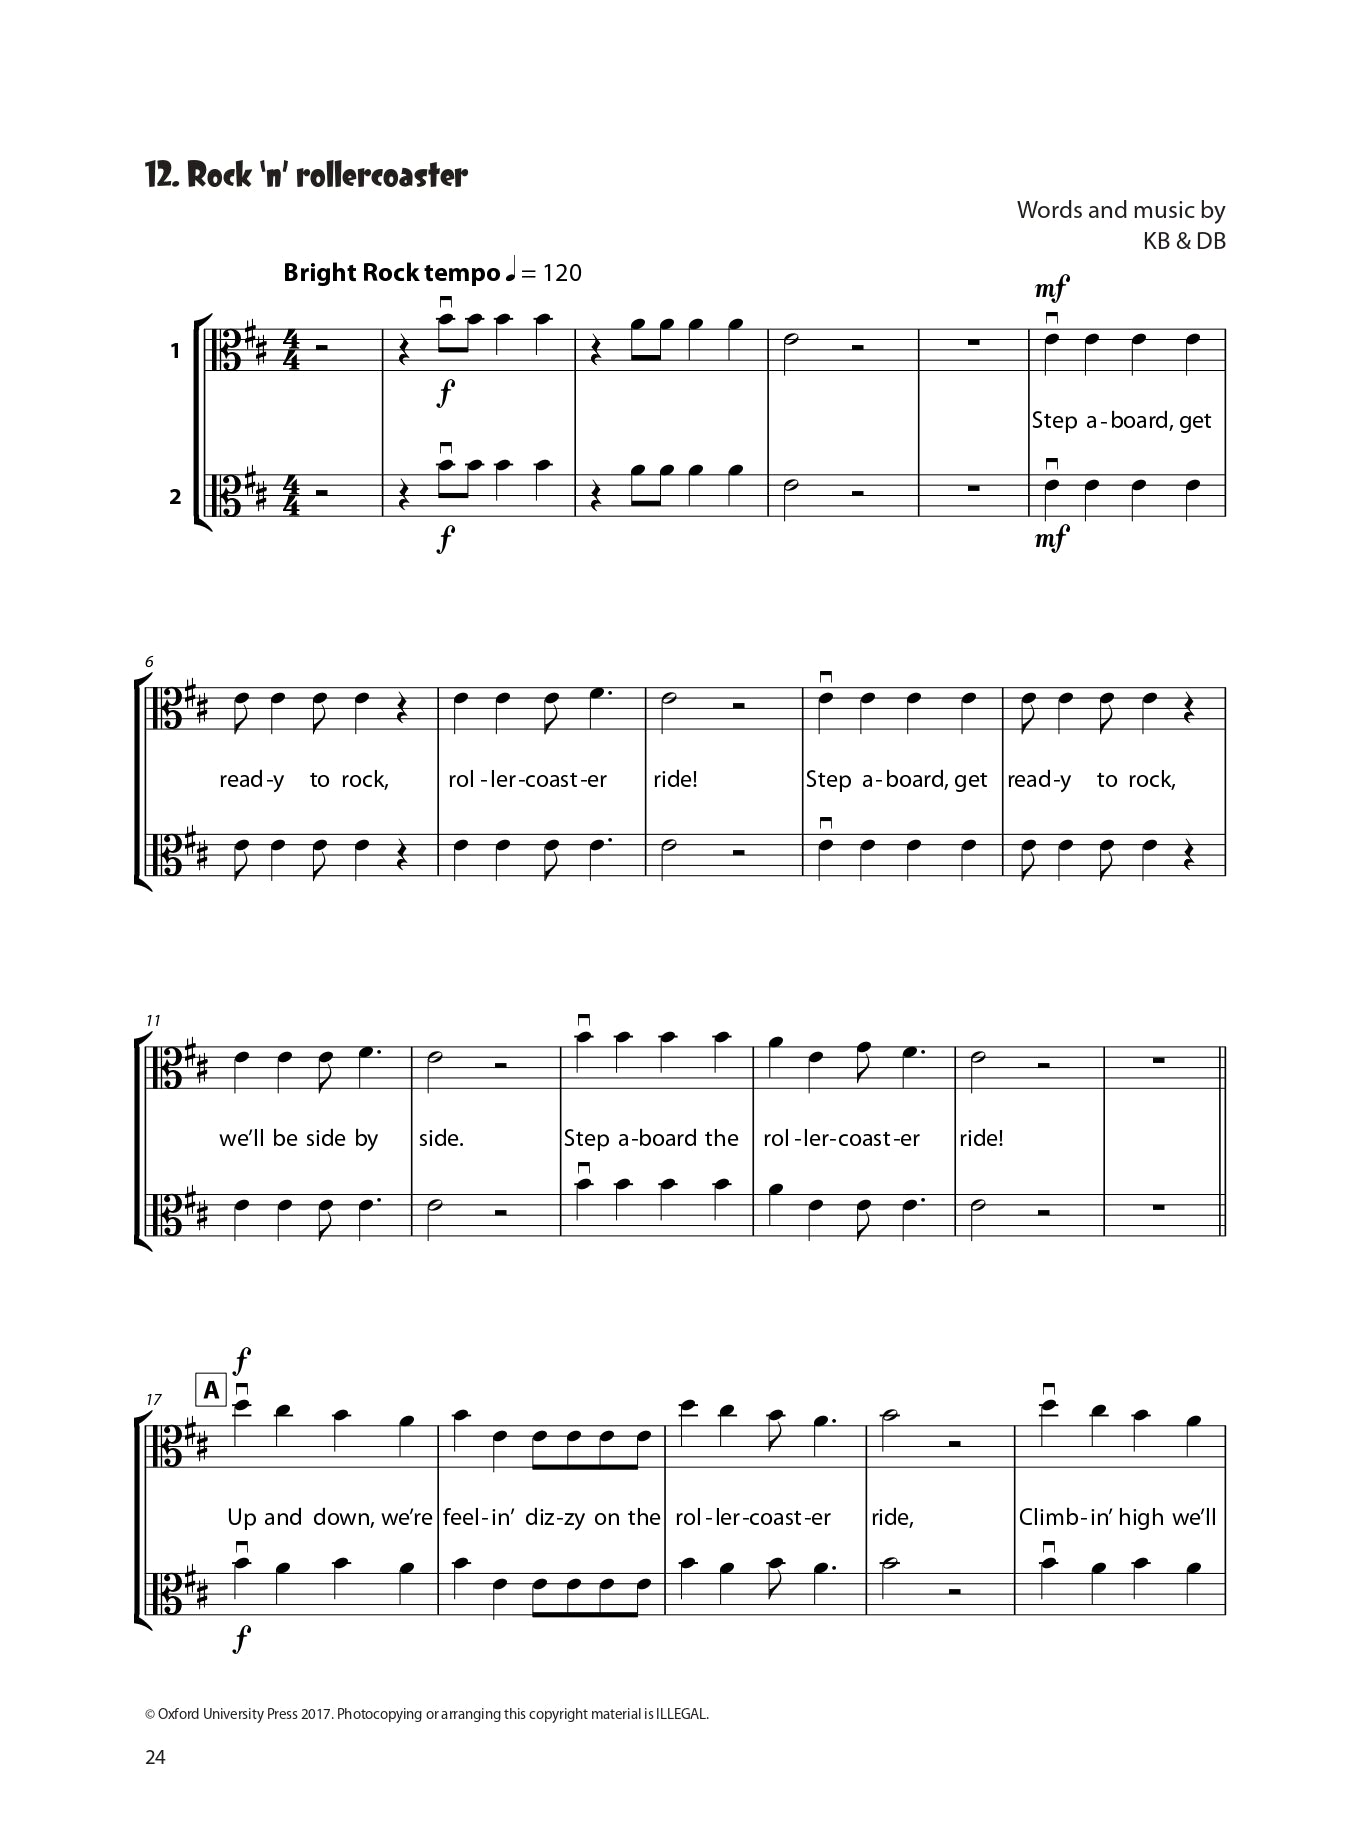 More String Time Joggers - Viola Book (Ensemble Series)